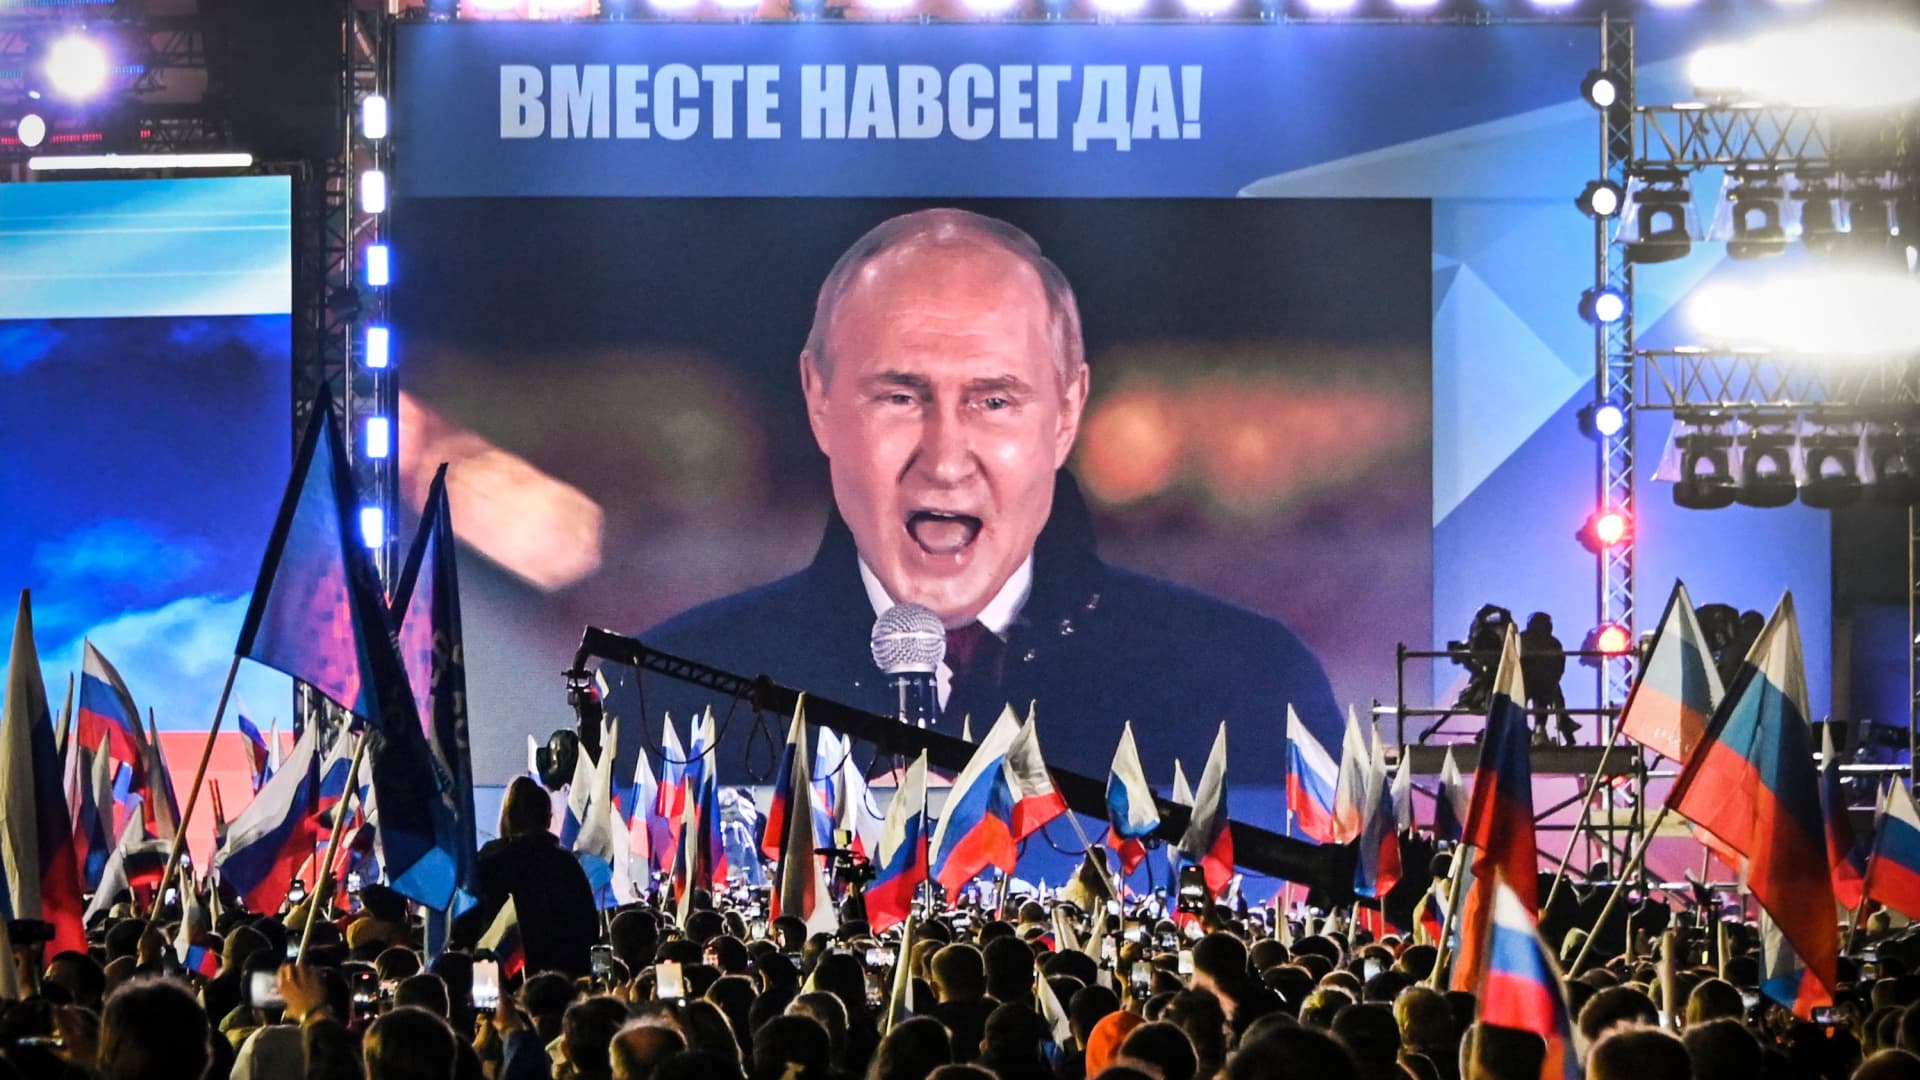 Putin’s supporters call for the liquidation of Ukraine as ‘genocidal rhetoric’ swells